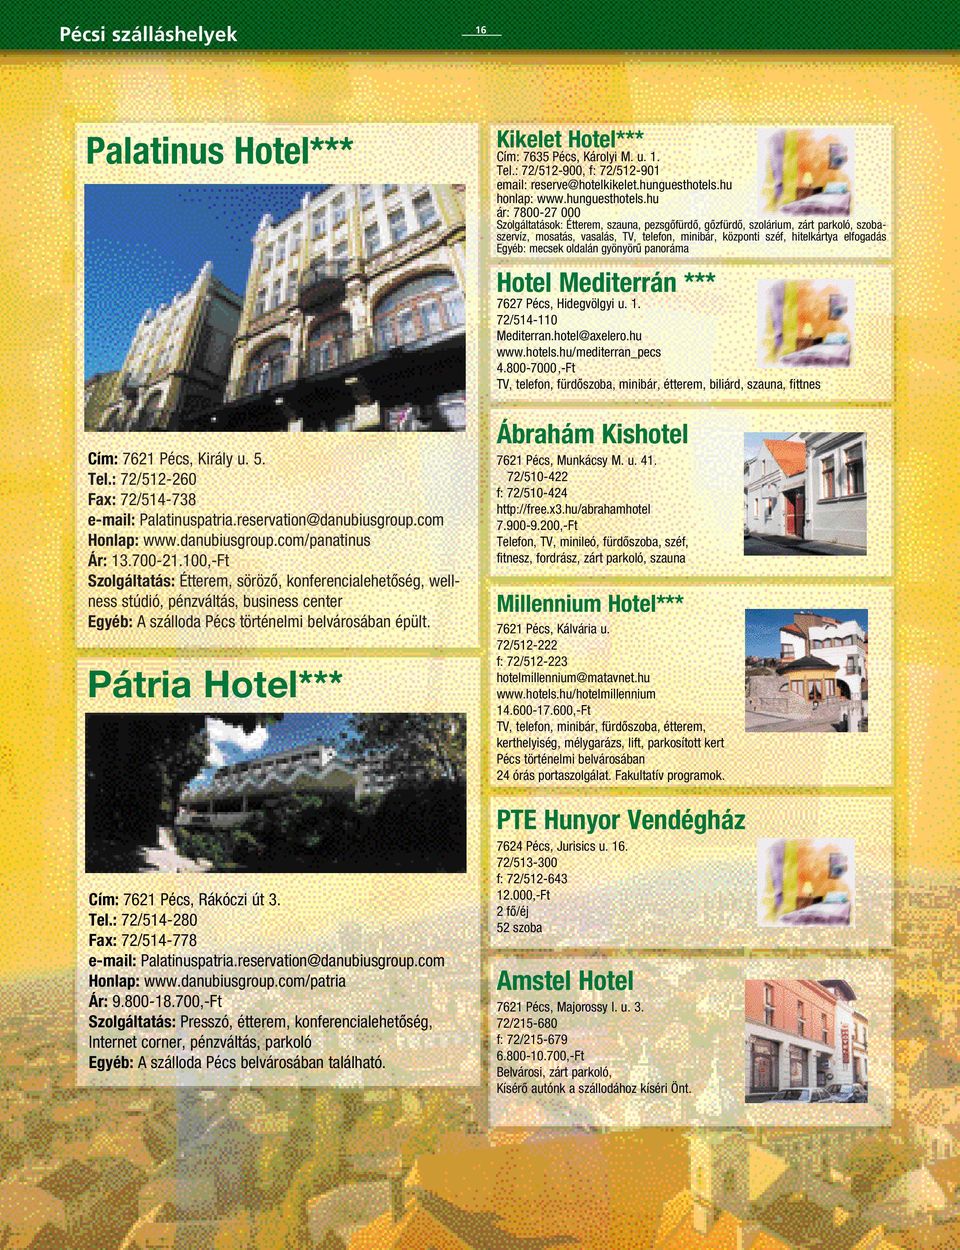 Pátria Hotel*** Cím: 7621 Pécs, Rákóczi út 3. Tel.: 72/514-280 Fax: 72/514-778 e-mail: Palatinuspatria.reservation@danubiusgroup.com Honlap: www.danubiusgroup.com/patria Ár: 9.800-18.